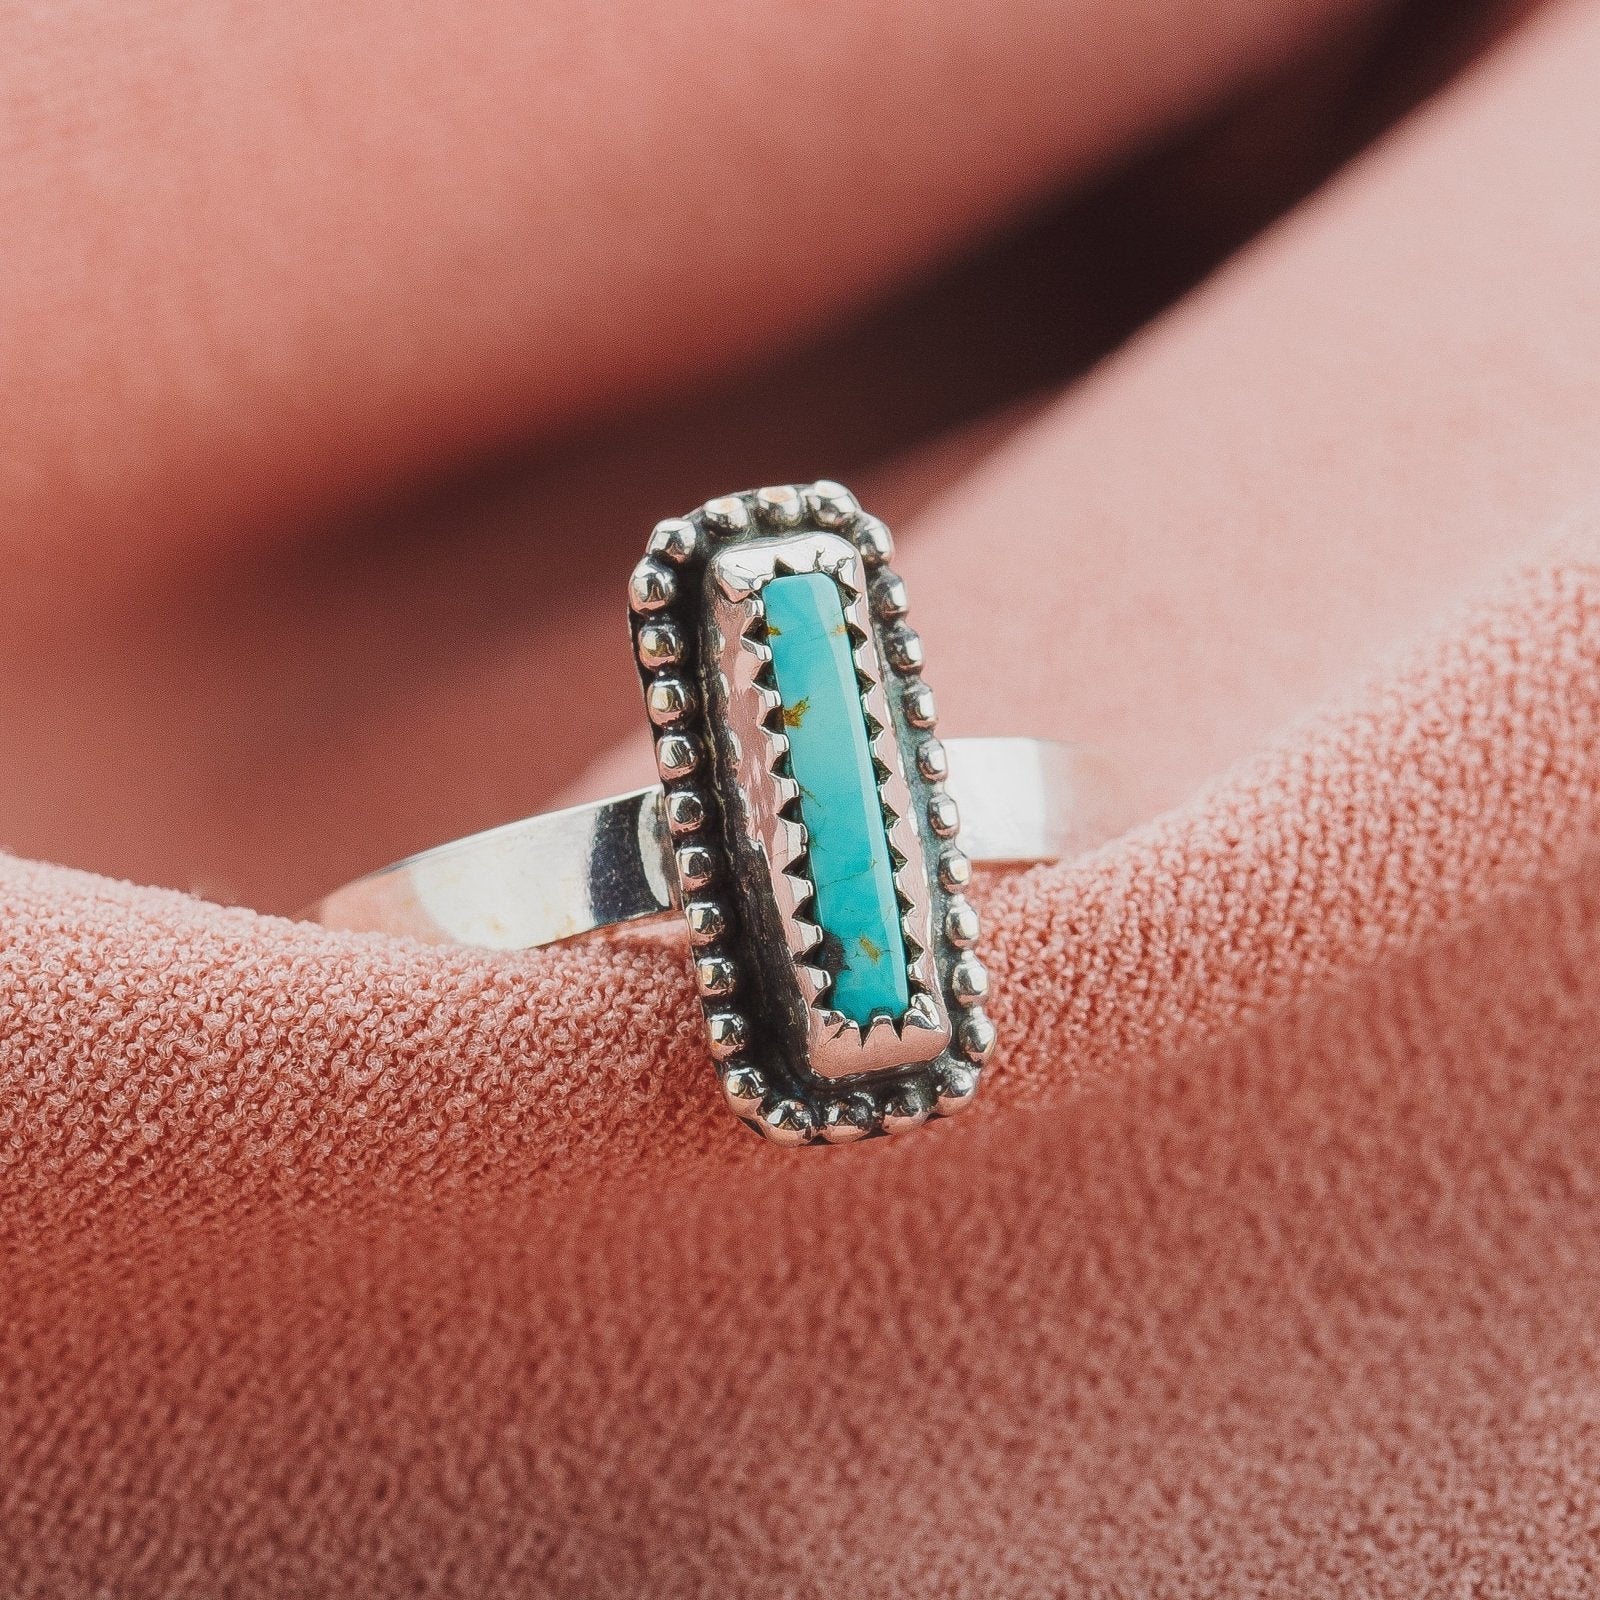 Size 8 Rectangle Royston Turquoise Gemstone Ring - Melanie Golden Jewelry - gemstone rings, rings